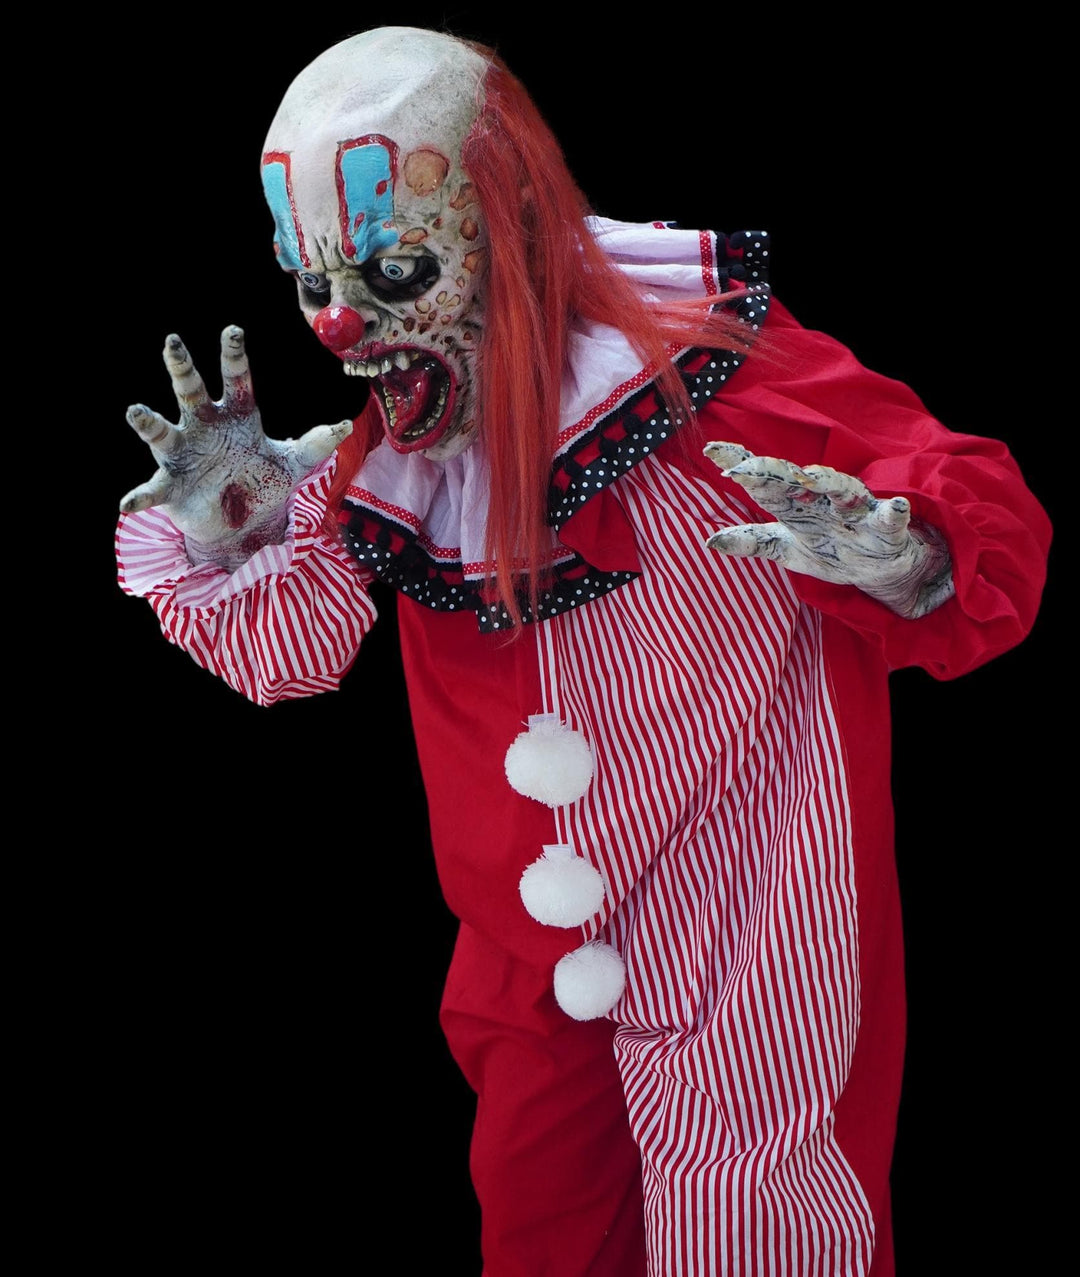 Adult Crazy Color Clown Costume